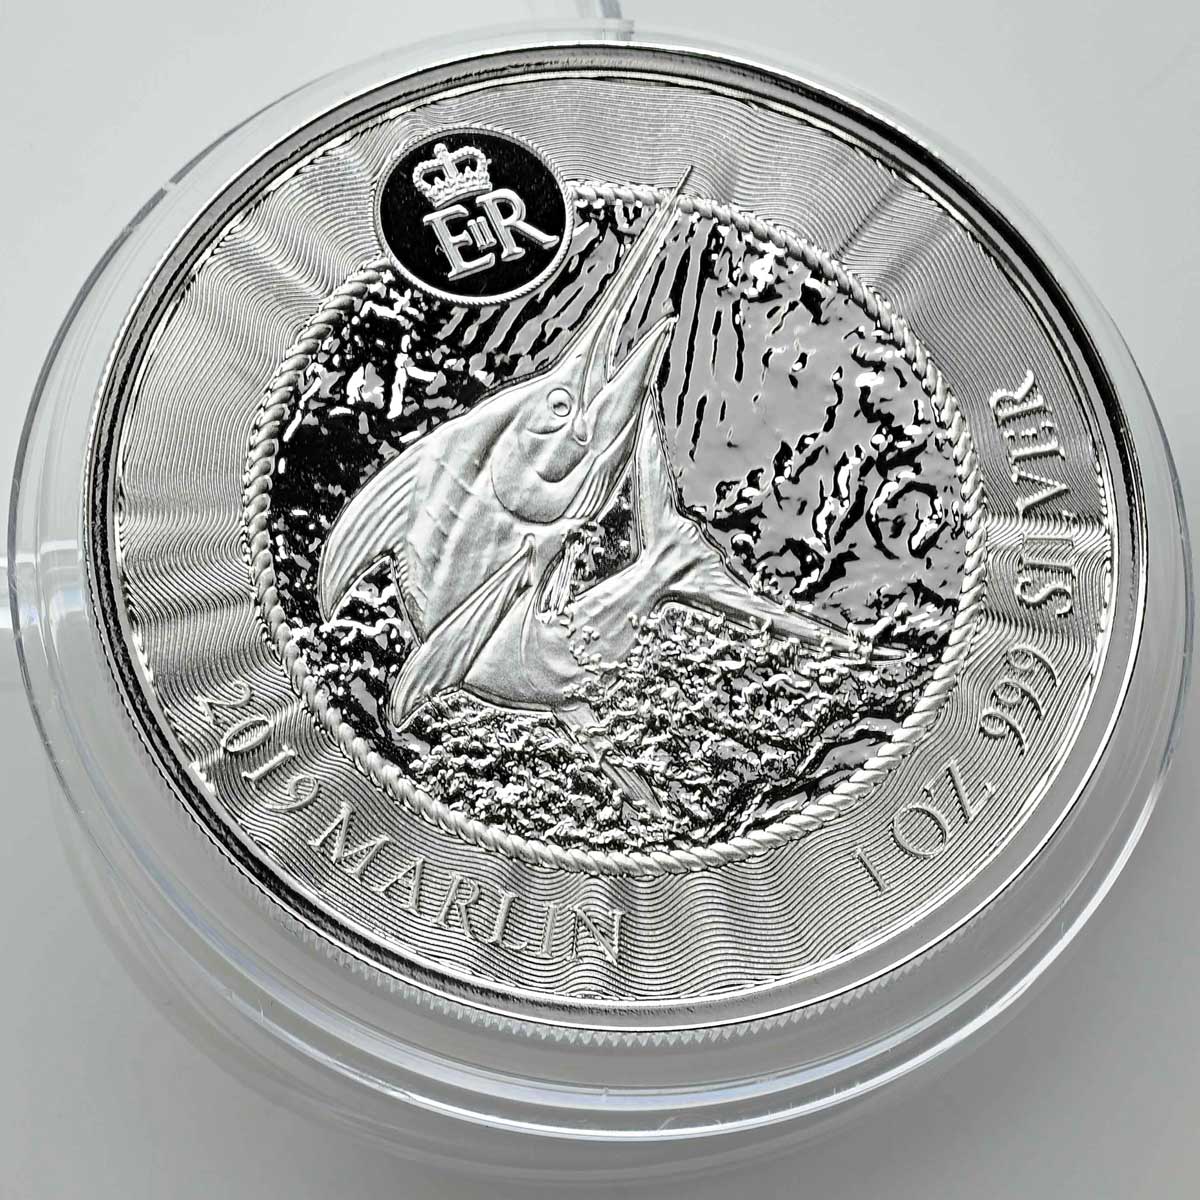 1 oz 5 Coin Pack 2019 Silver Cayman Islands Marlin